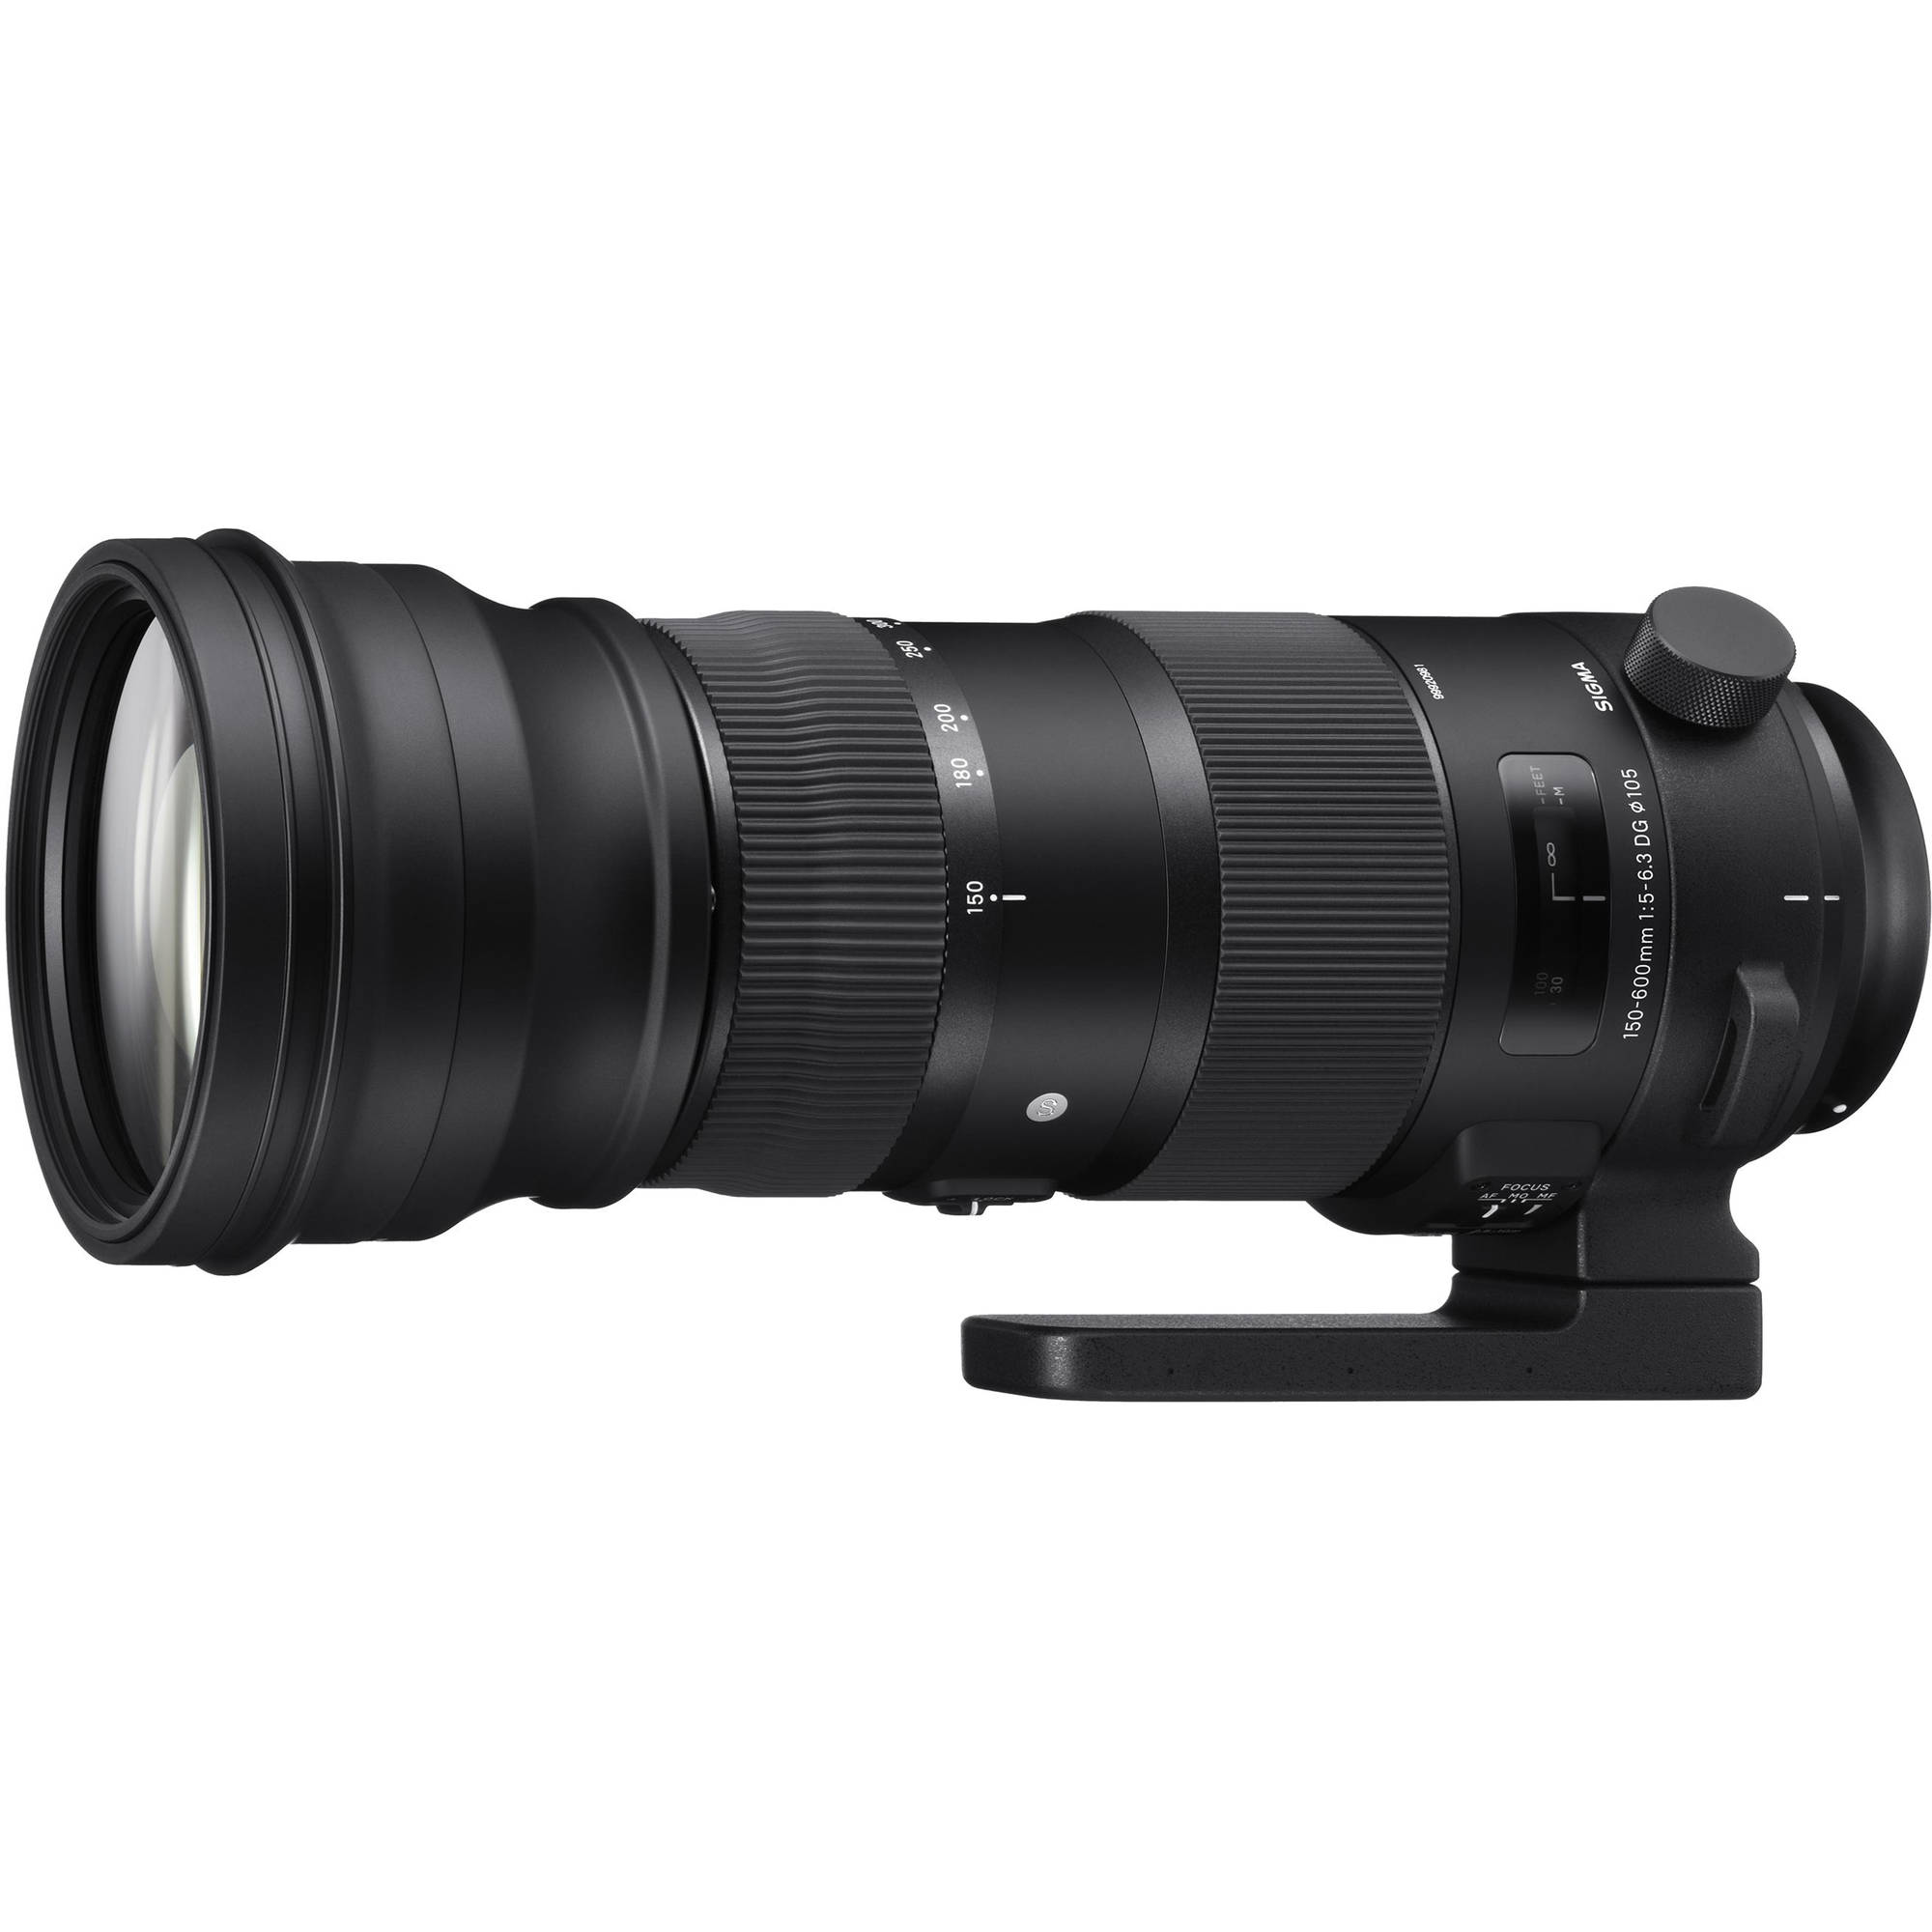 Sigma 150-600mm F5-6.3 SPORT DG OS HSM Lens - Canon Fit